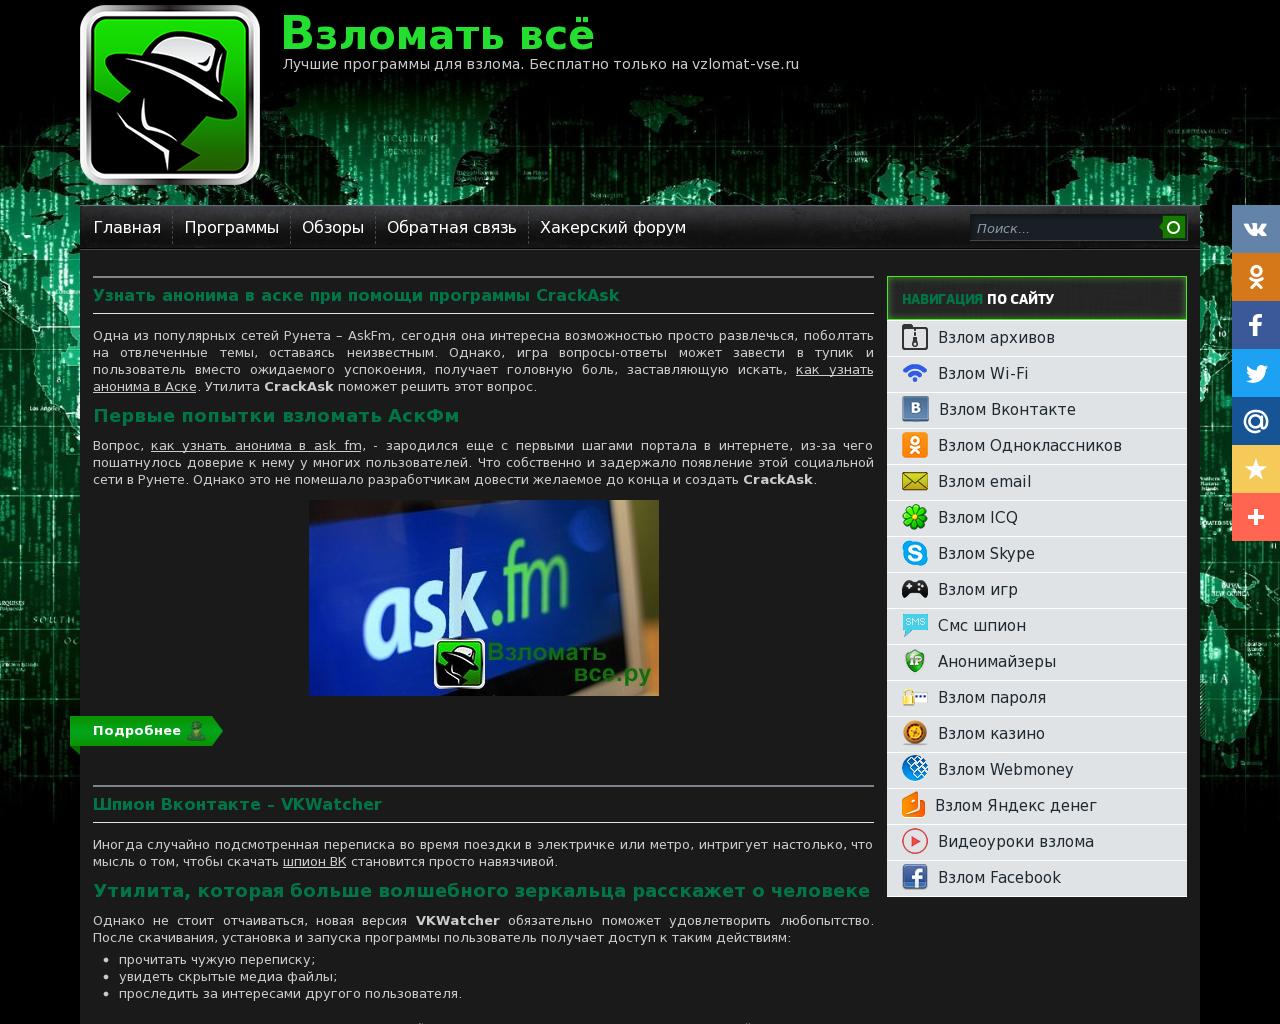 Изображение сайта vzlomat-vse.ru в разрешении 1280x1024